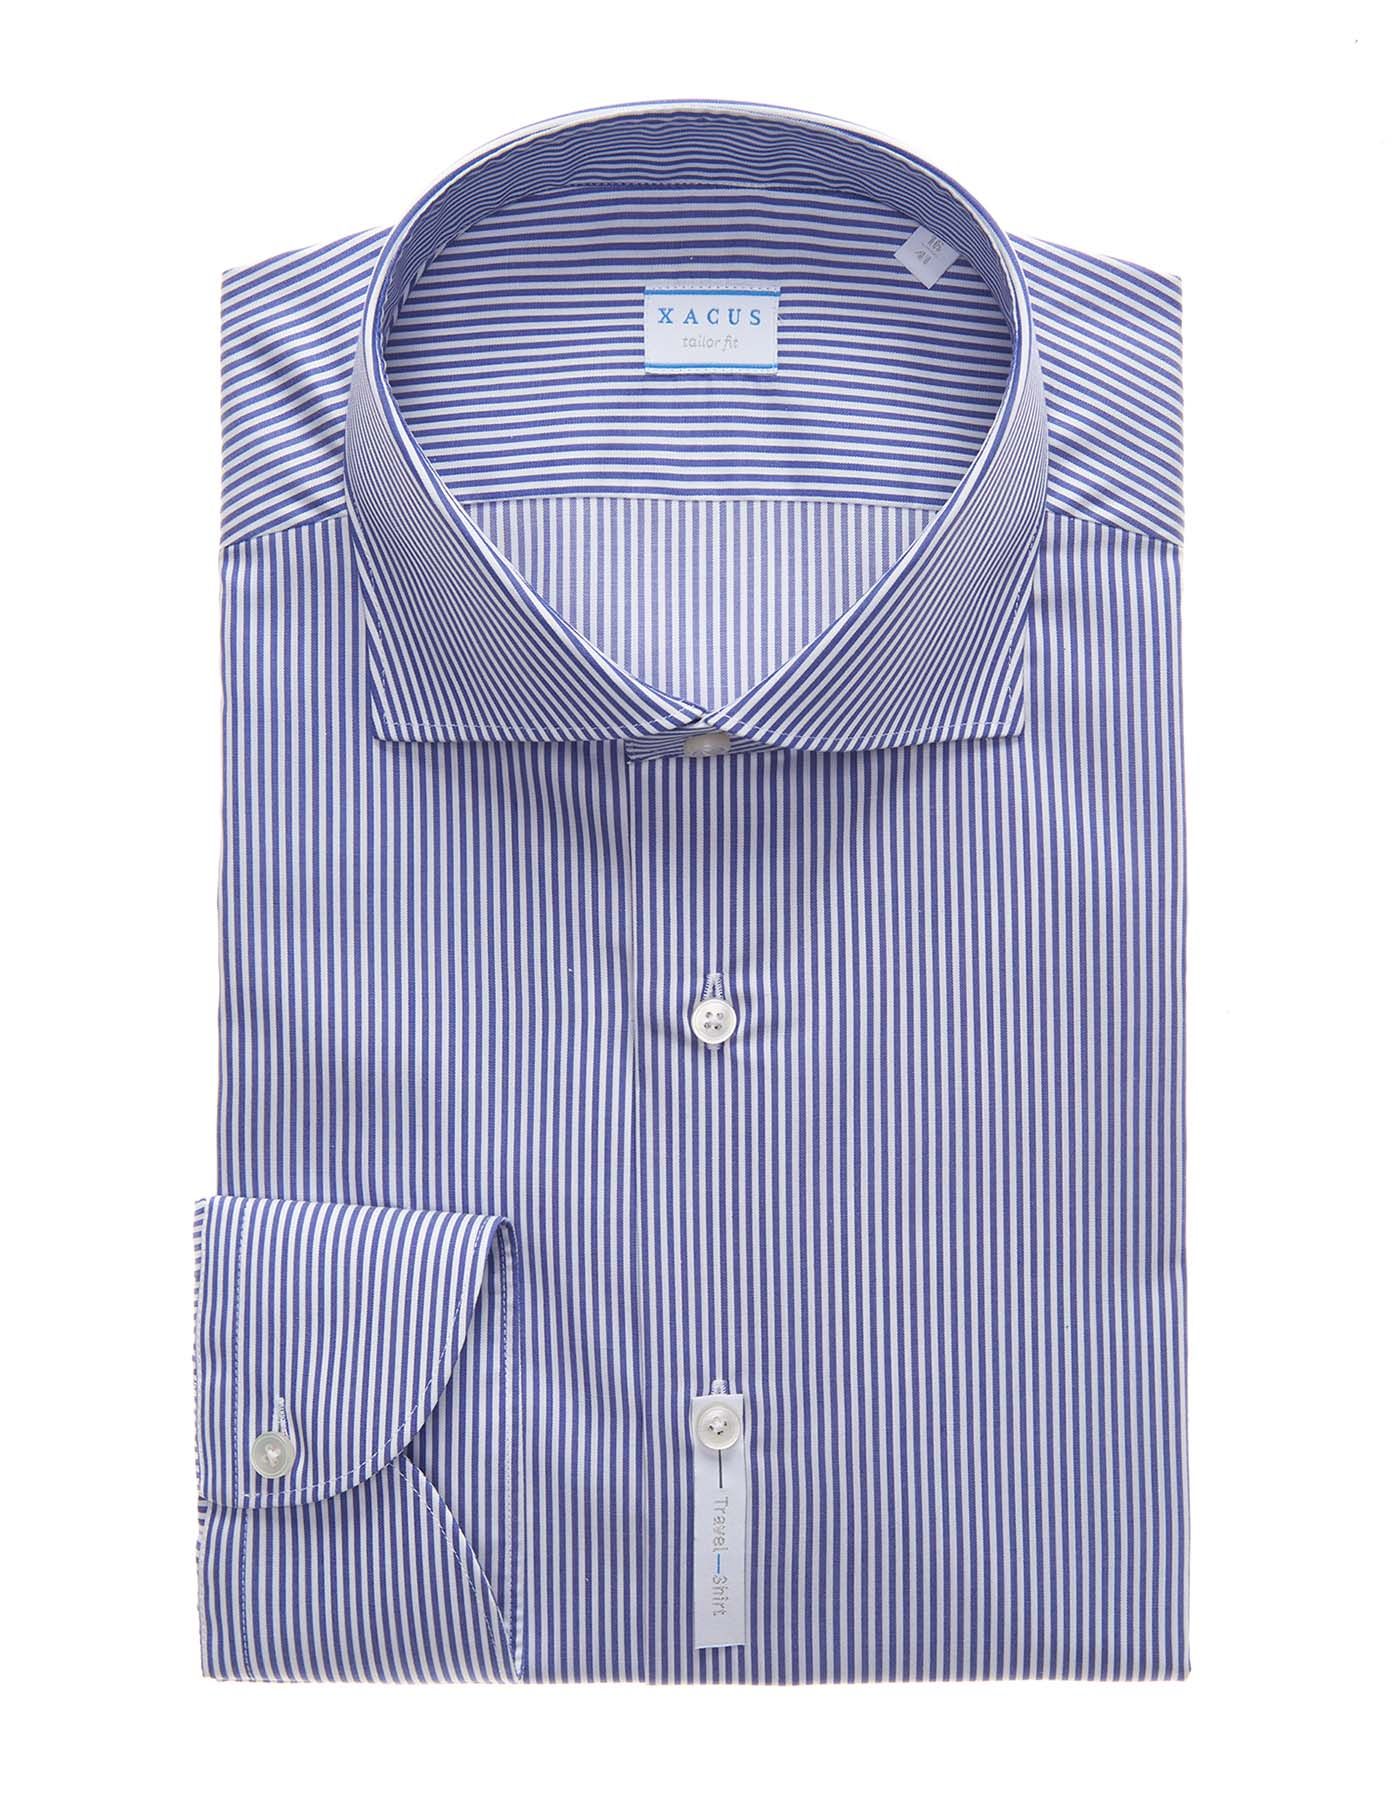 Shirt Collar cutaway Blue Twill for Male - Xacus